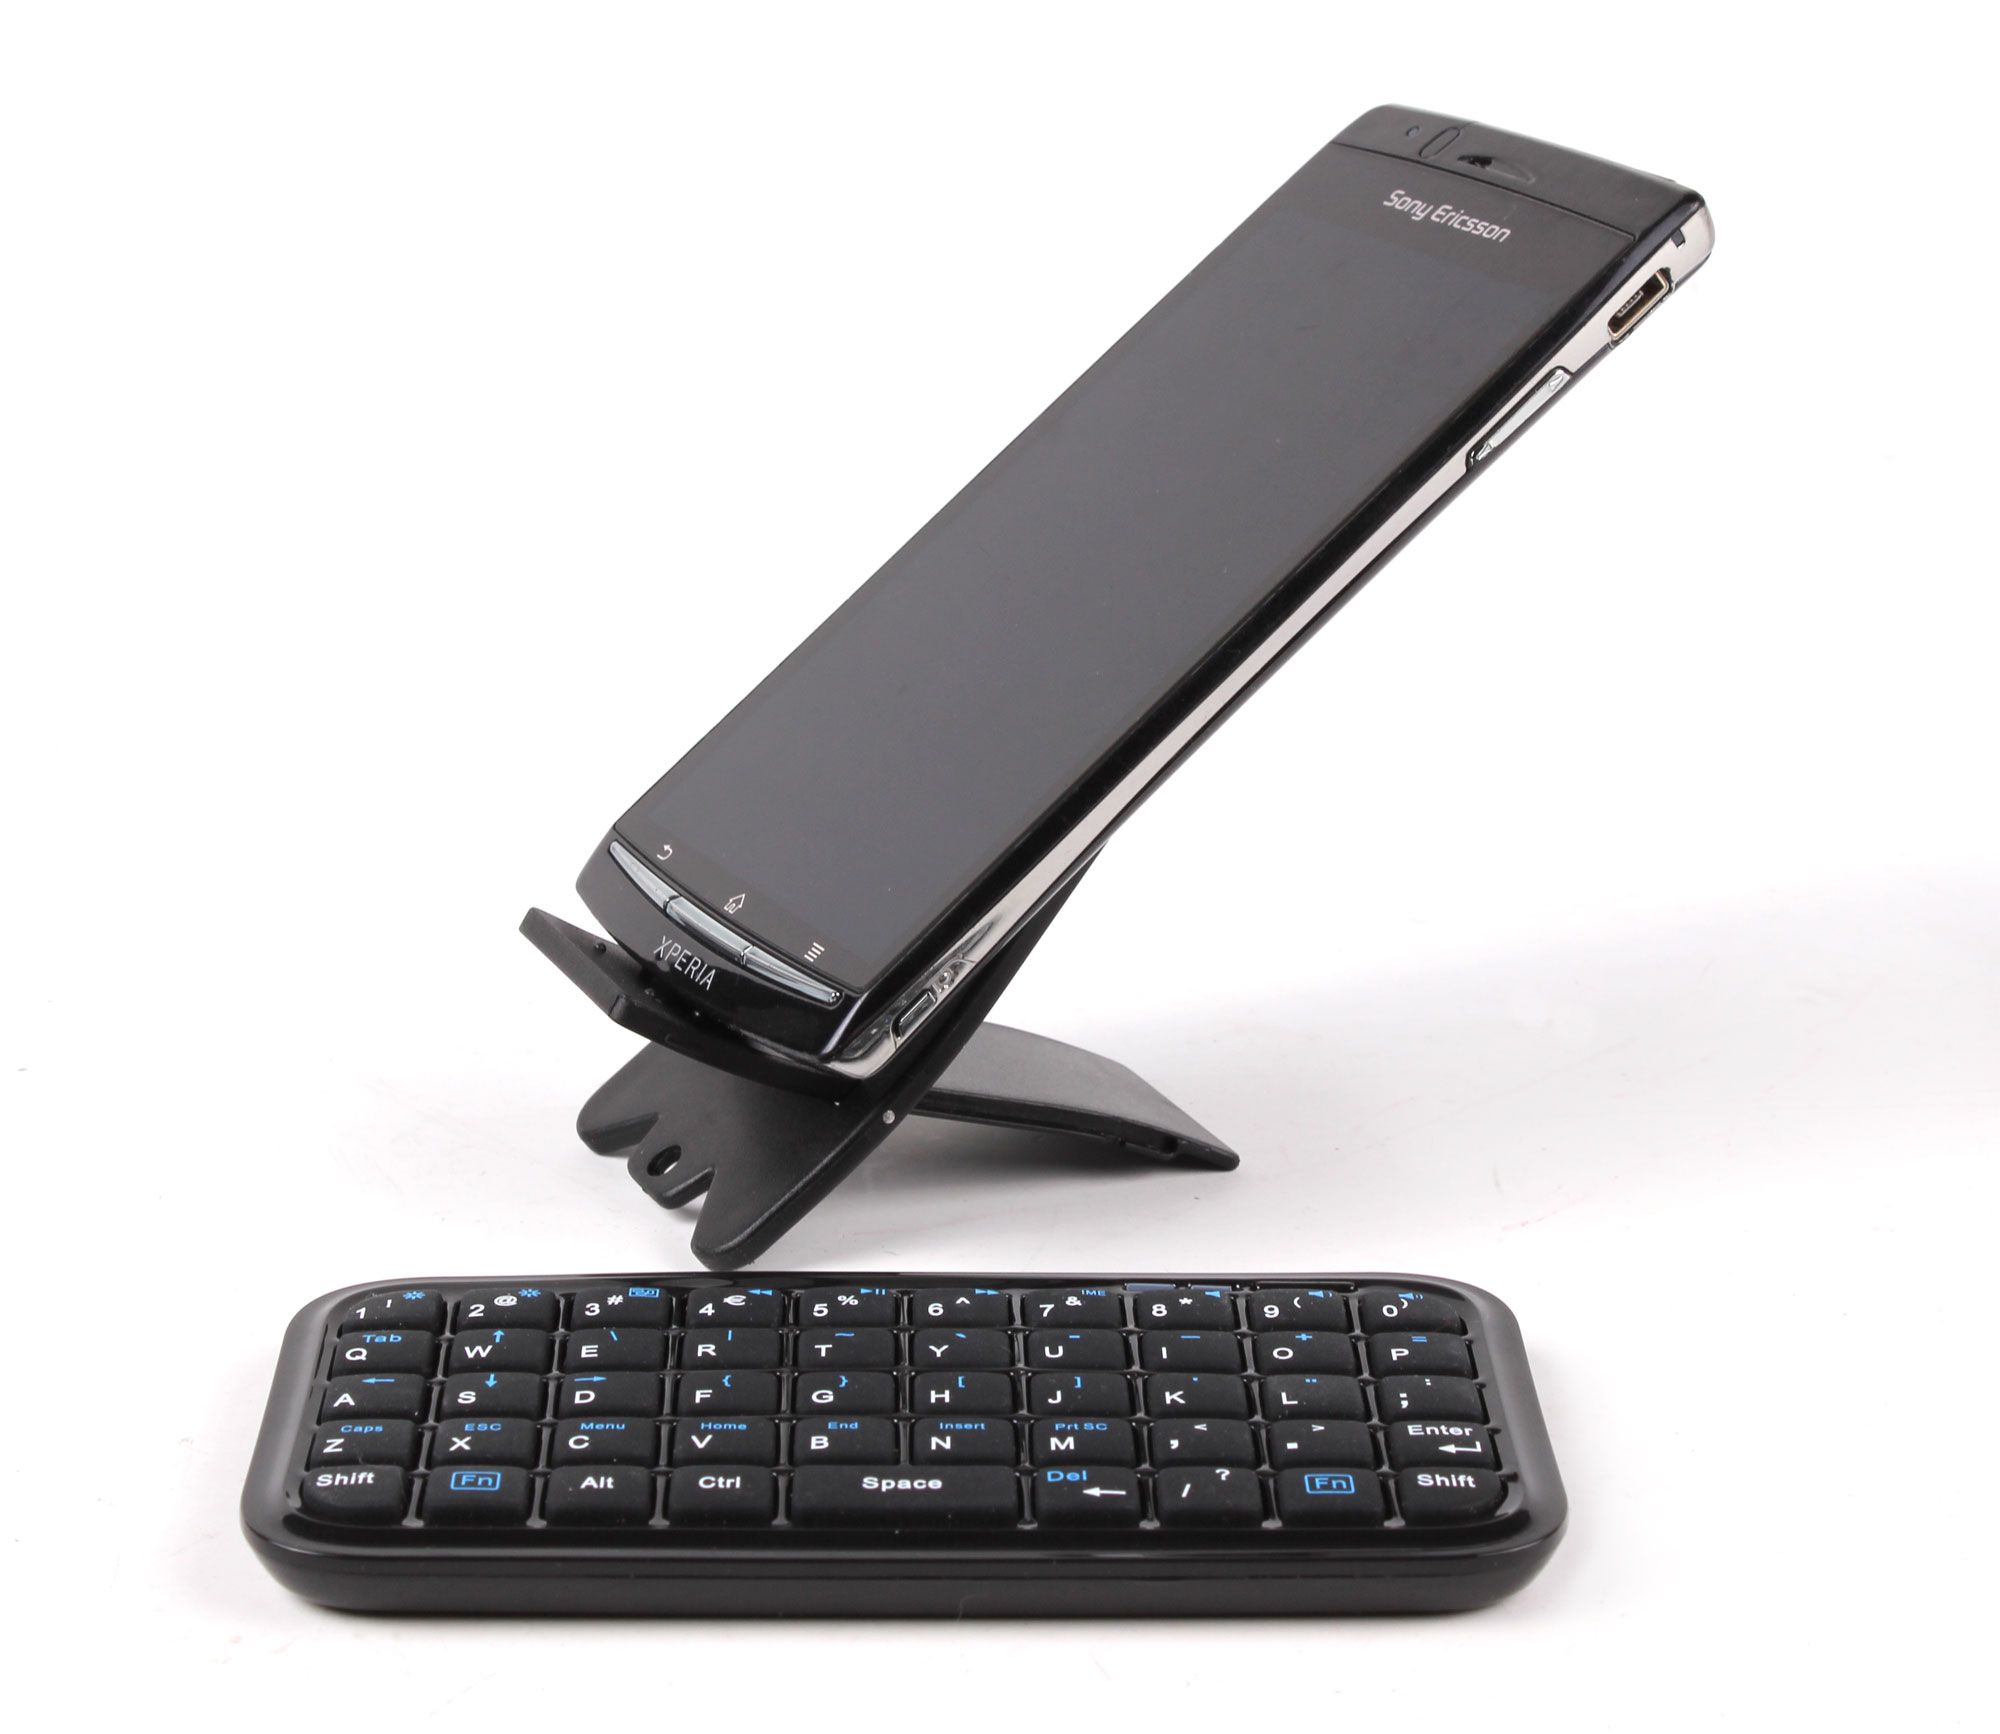 bluetooth keyboard samsung galaxy s ii duragadget s new mini bluetooth 